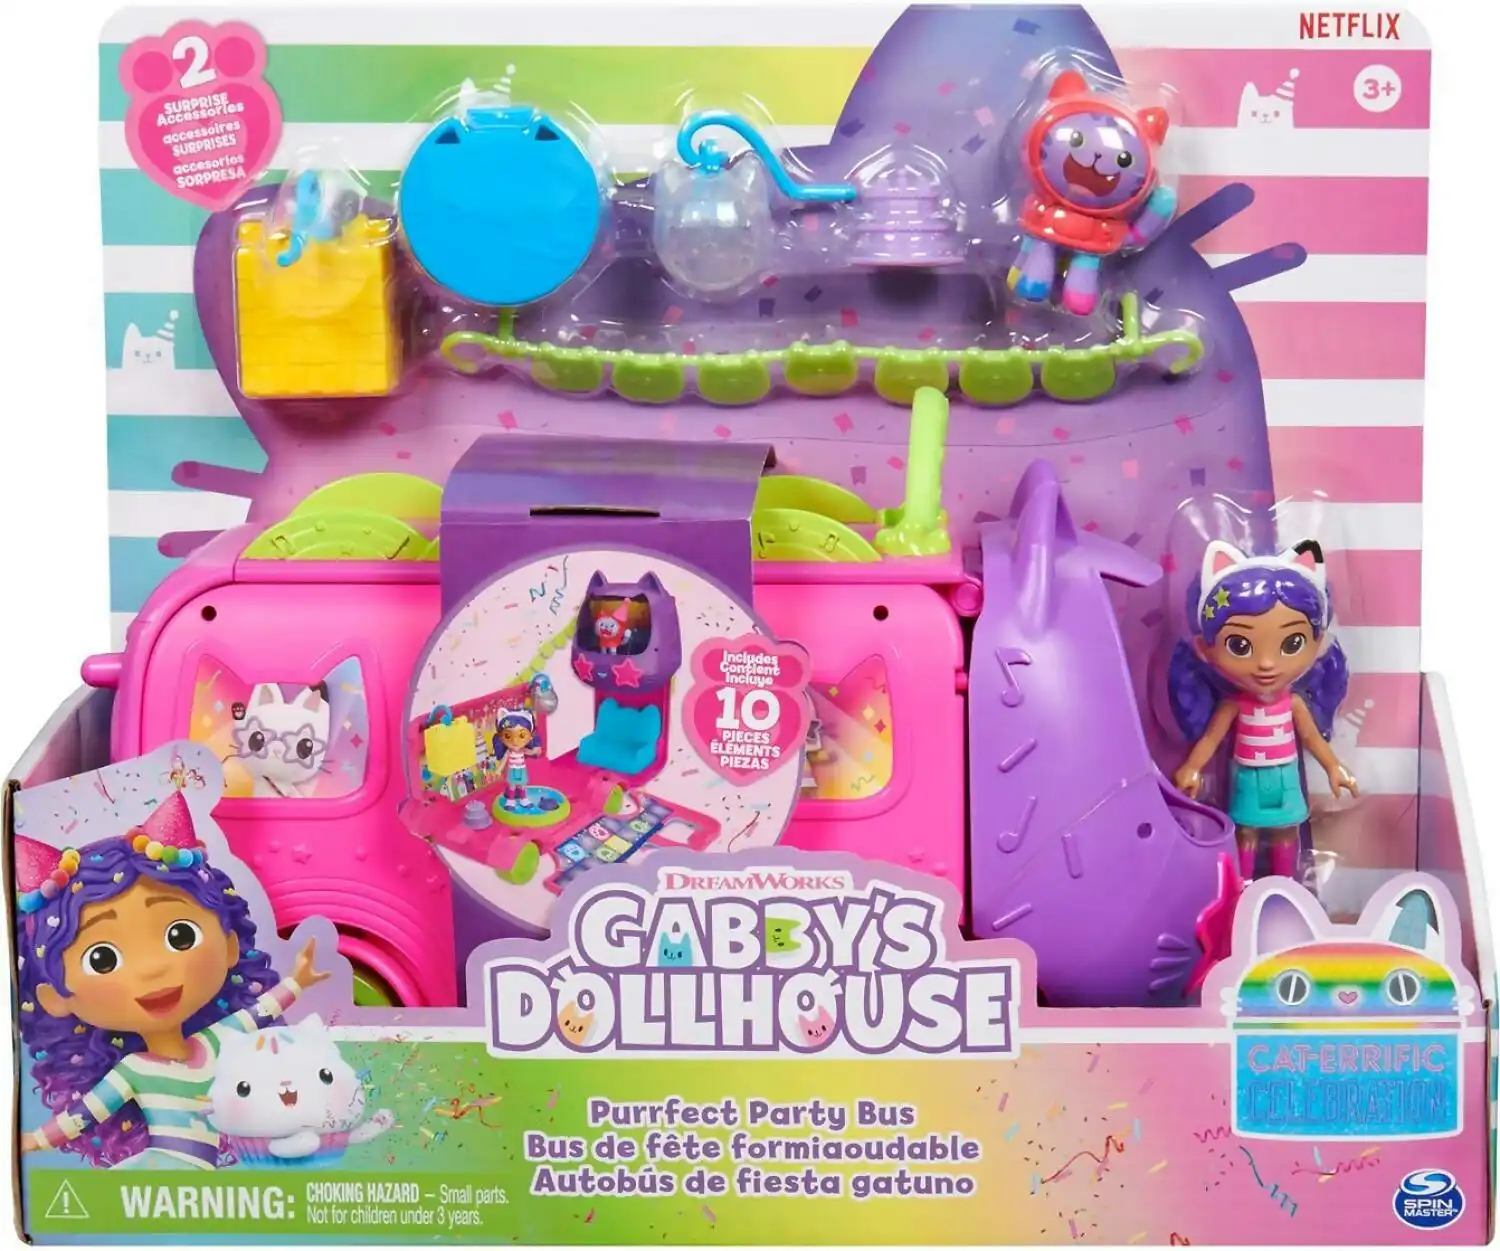 Gabby's Dollhouse - Celebration Party Bus Playset